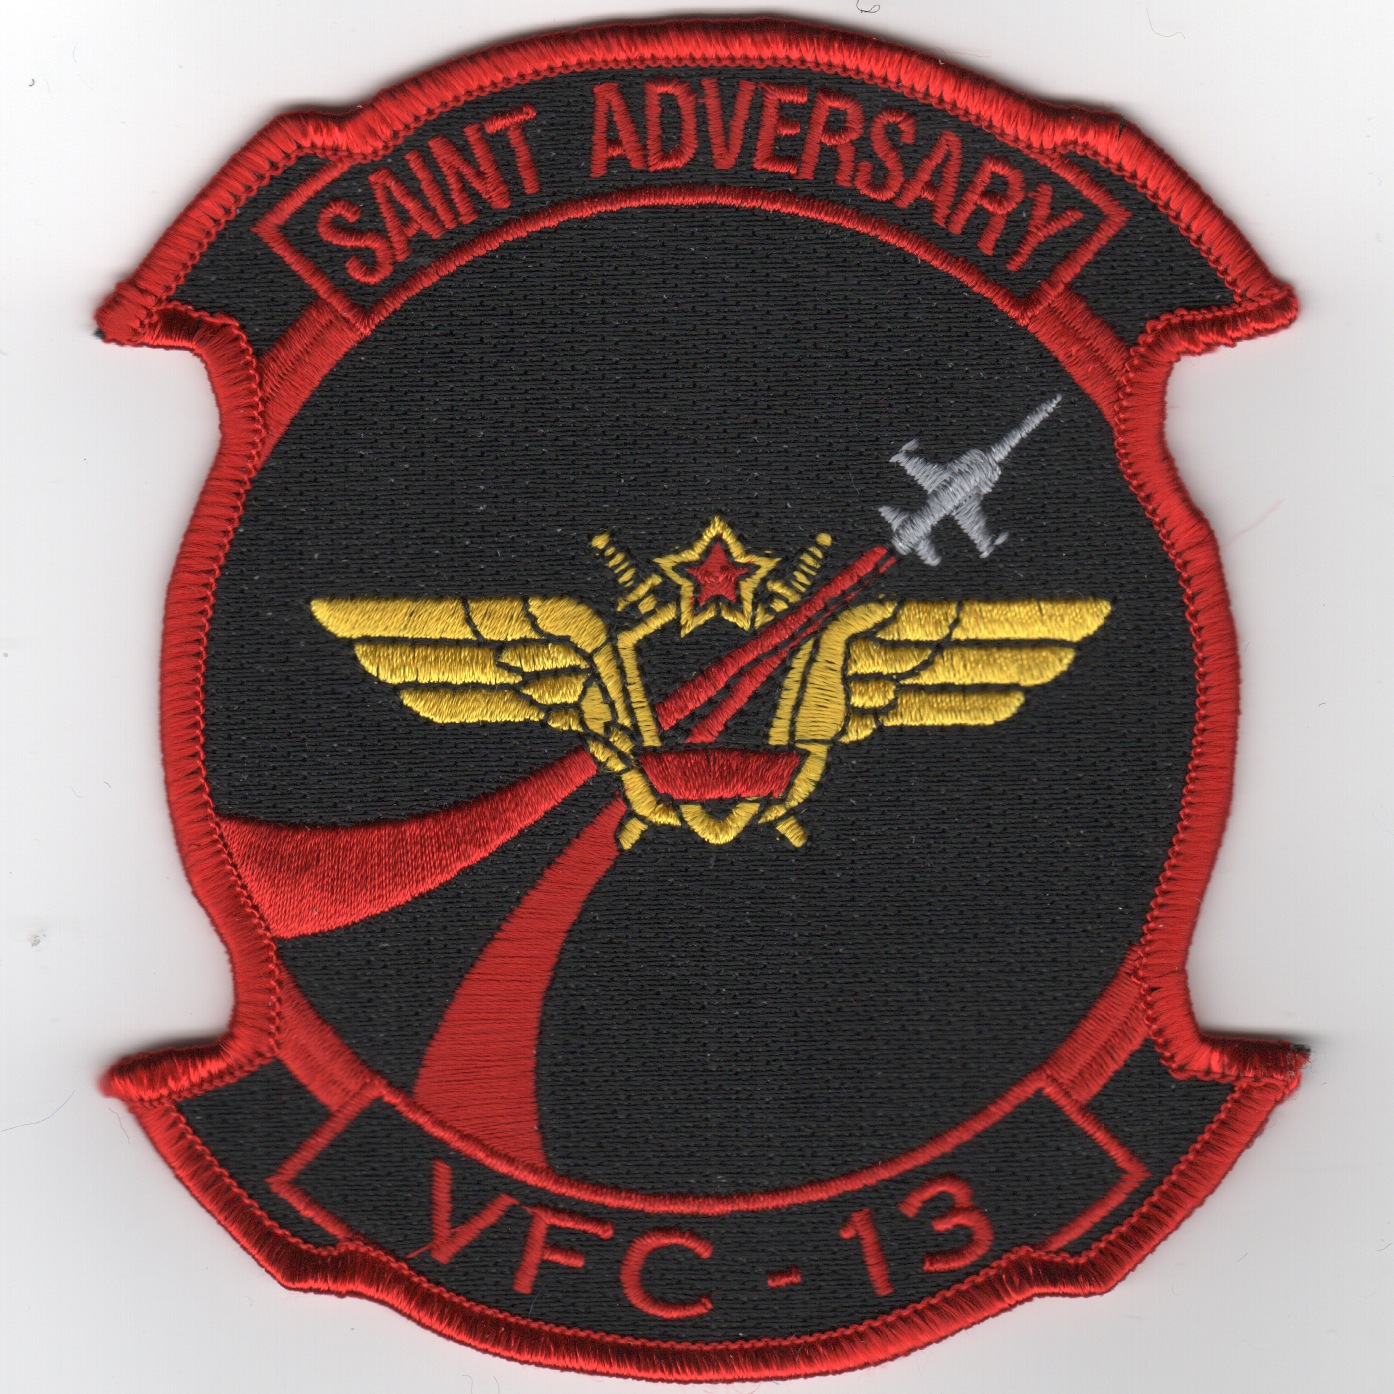 VFC-13 Adversary Squadron Patch (Red/Black)